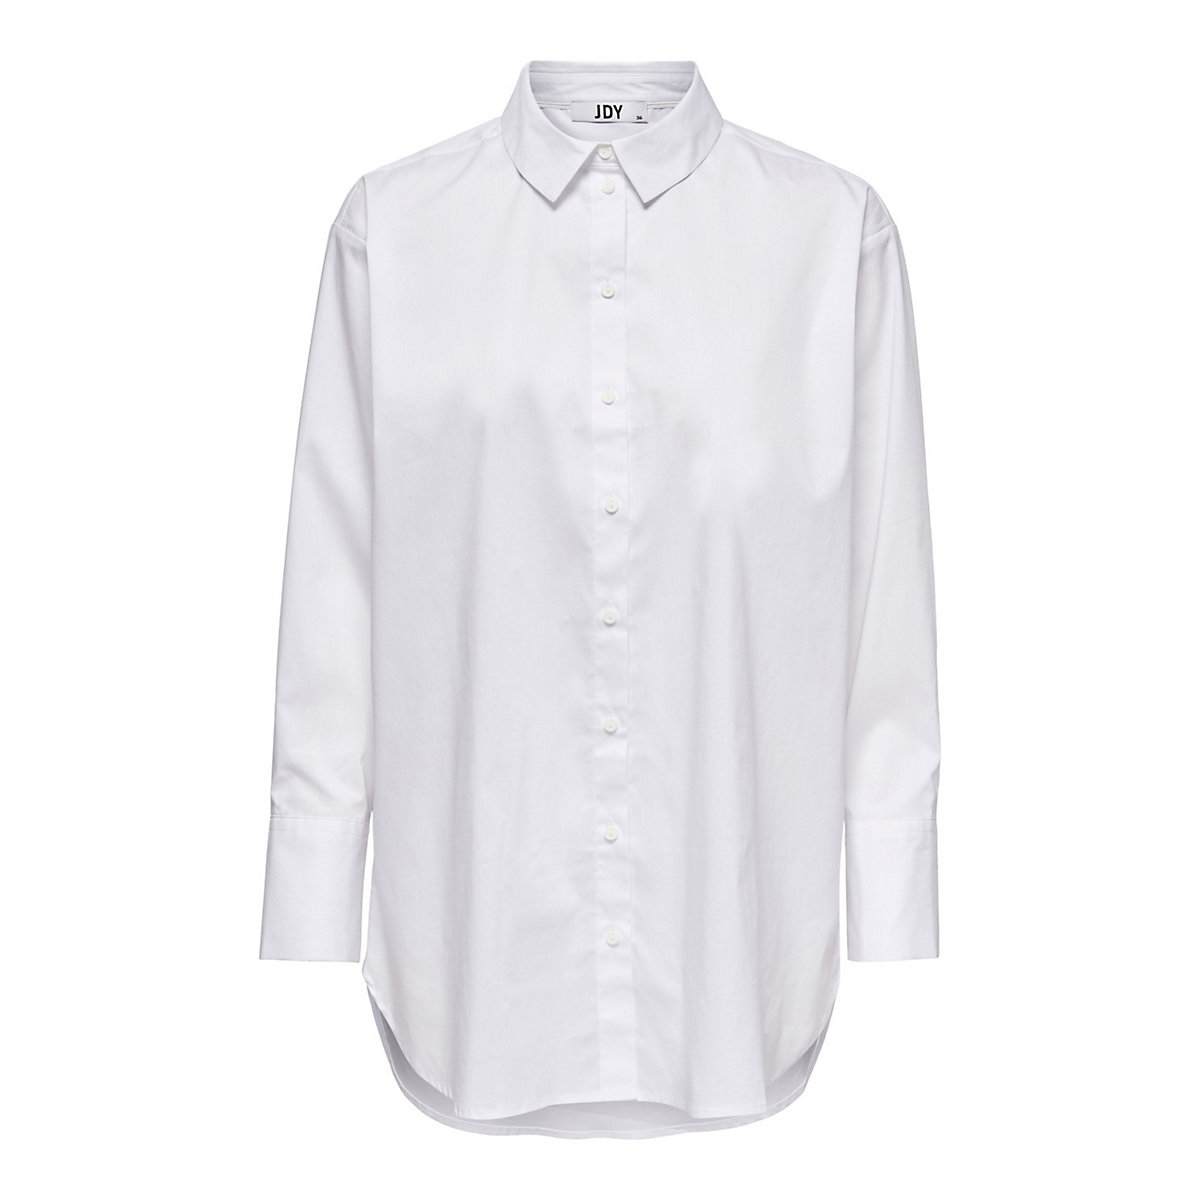 Jacqueline de Yong Design Shirt Freizeit Hemd Bluse weiß